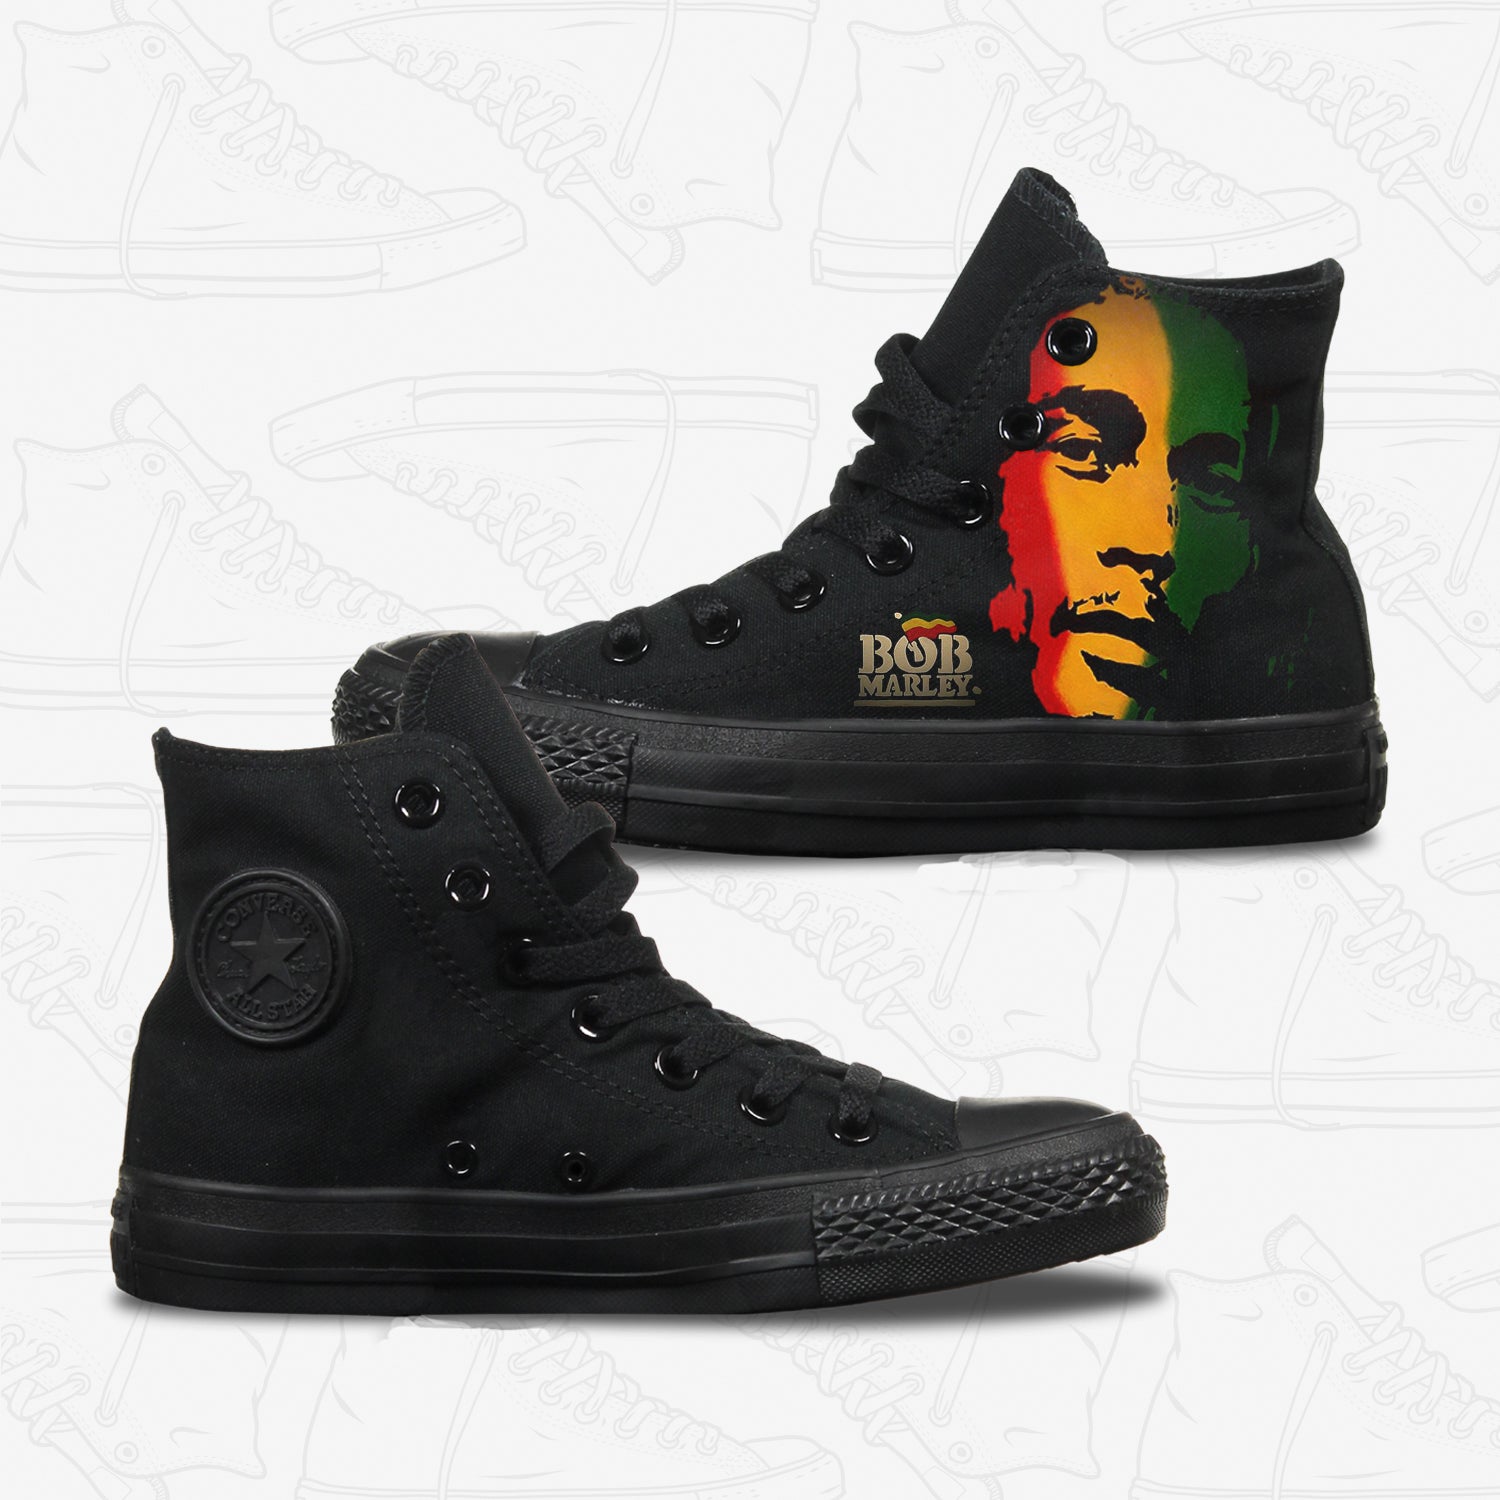 Bob Marley Adult Converse Shoes